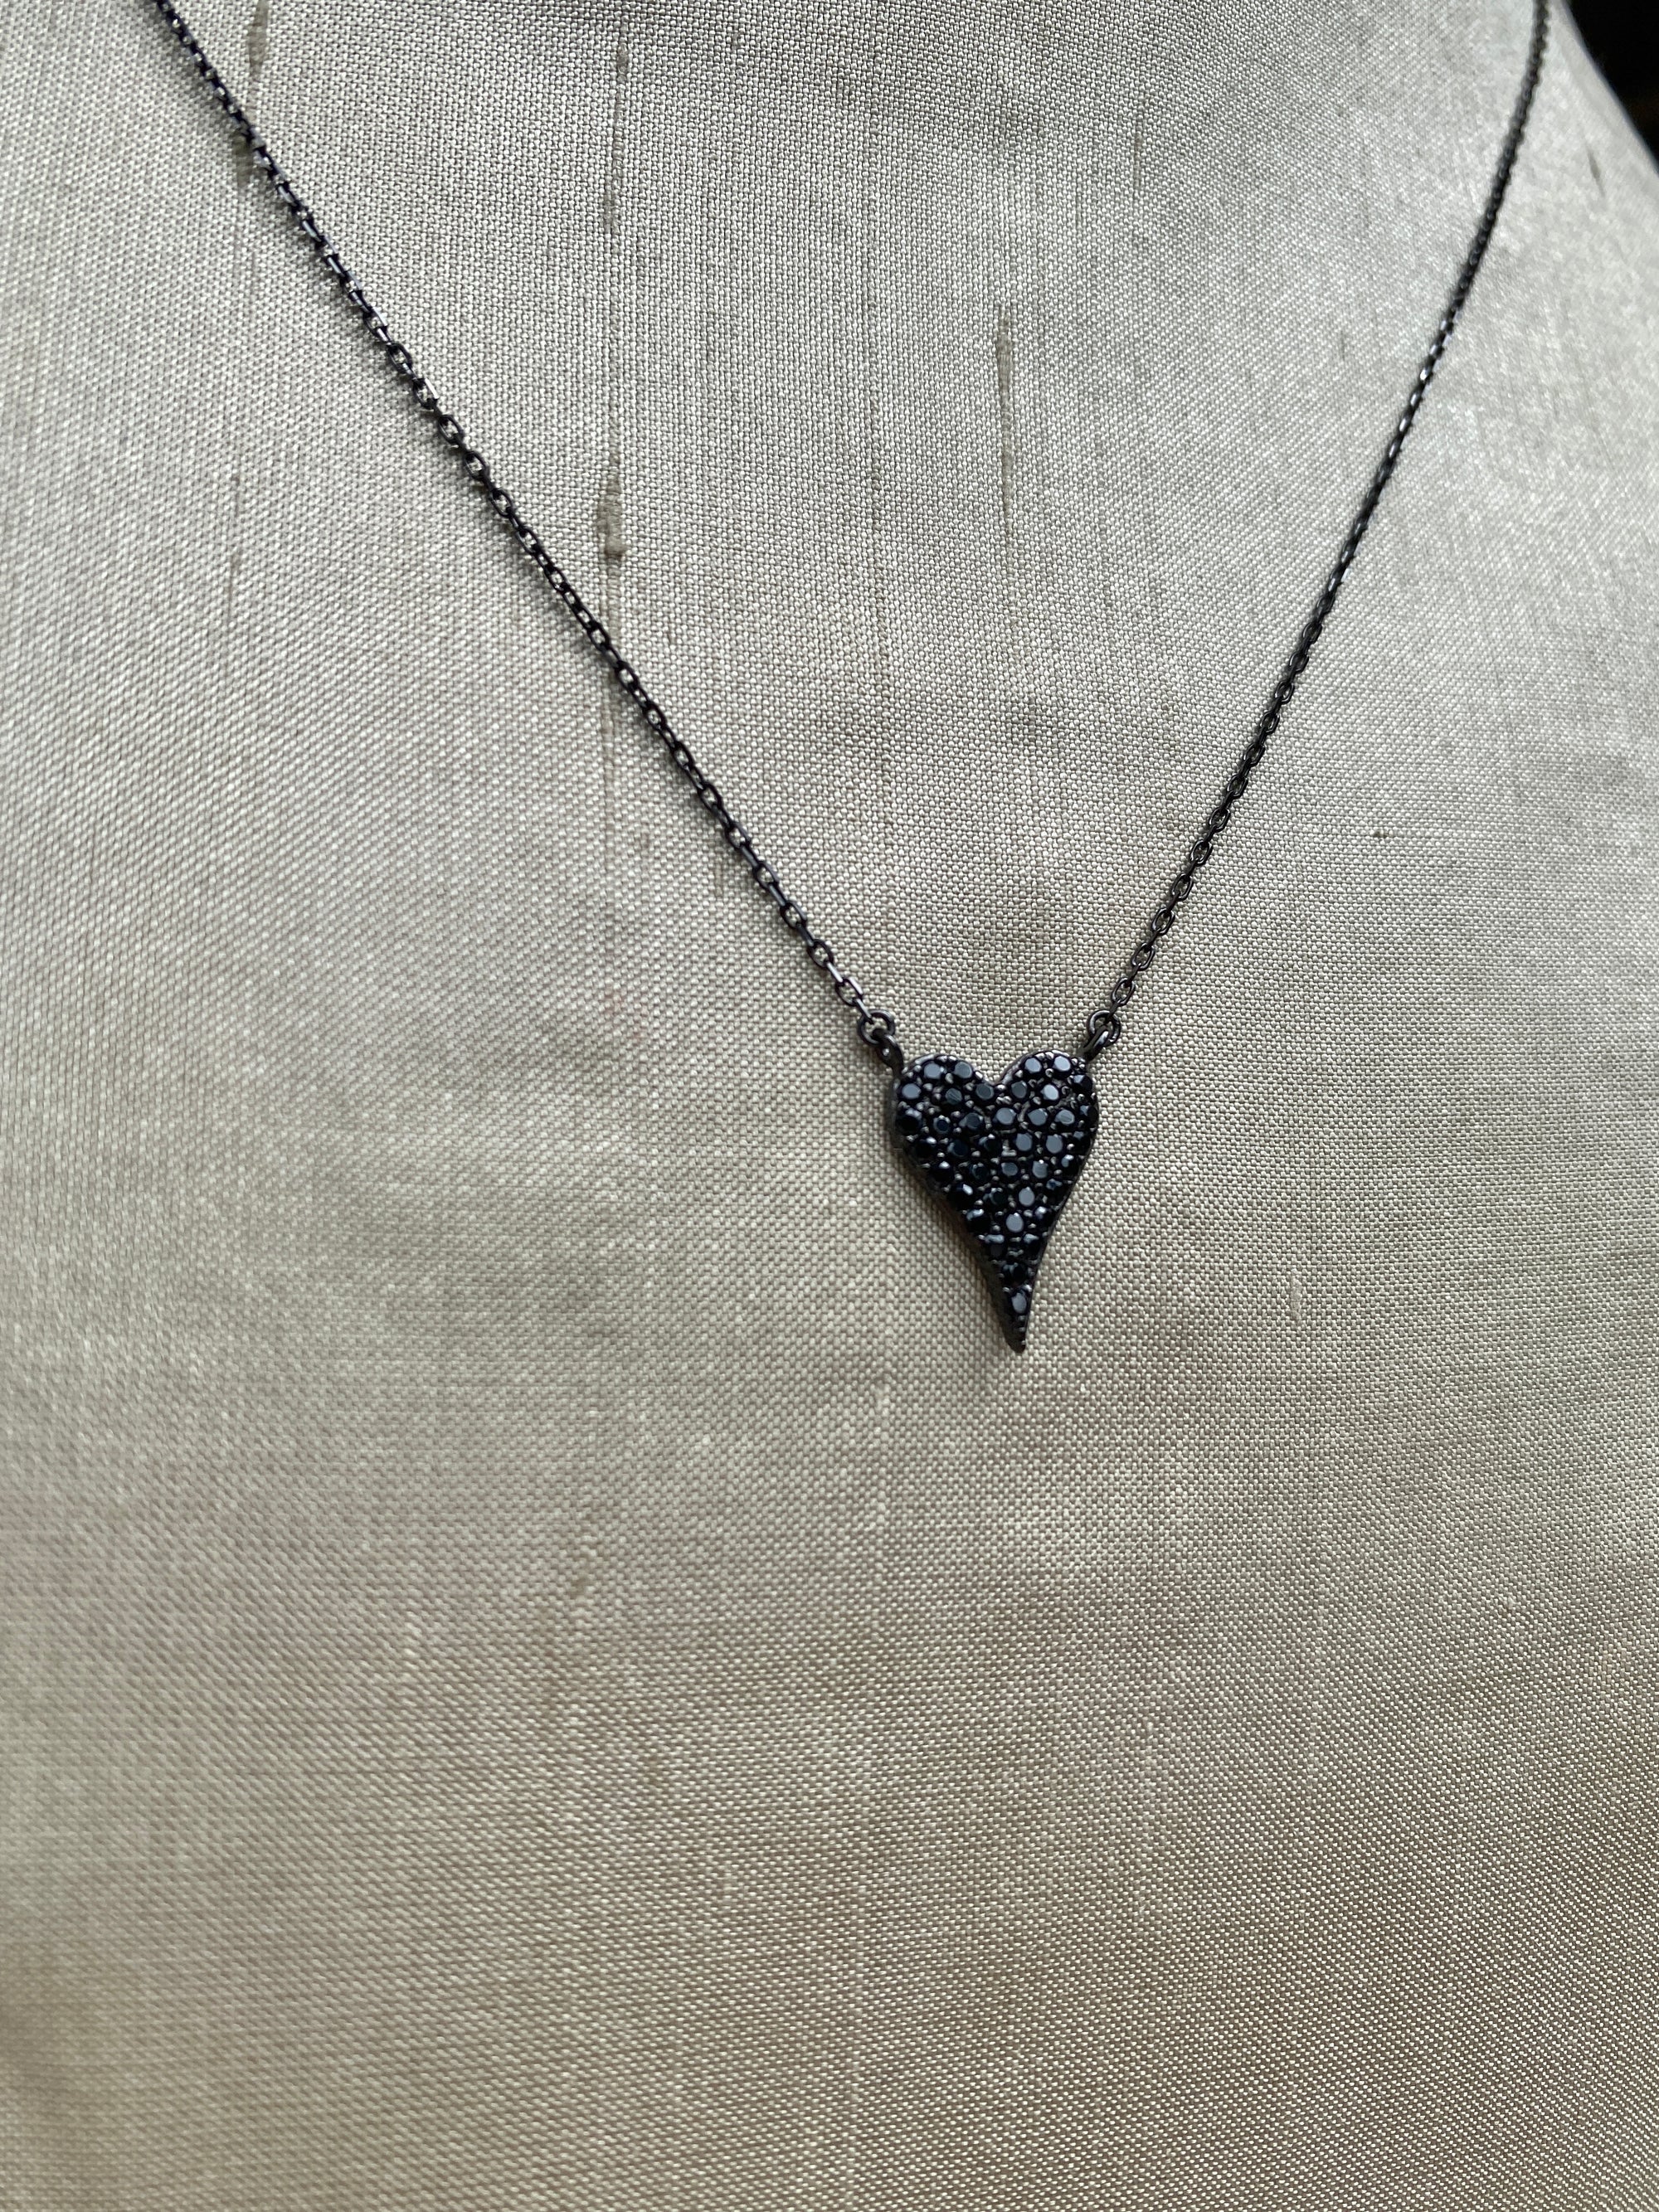 Black on Black Heart Necklace